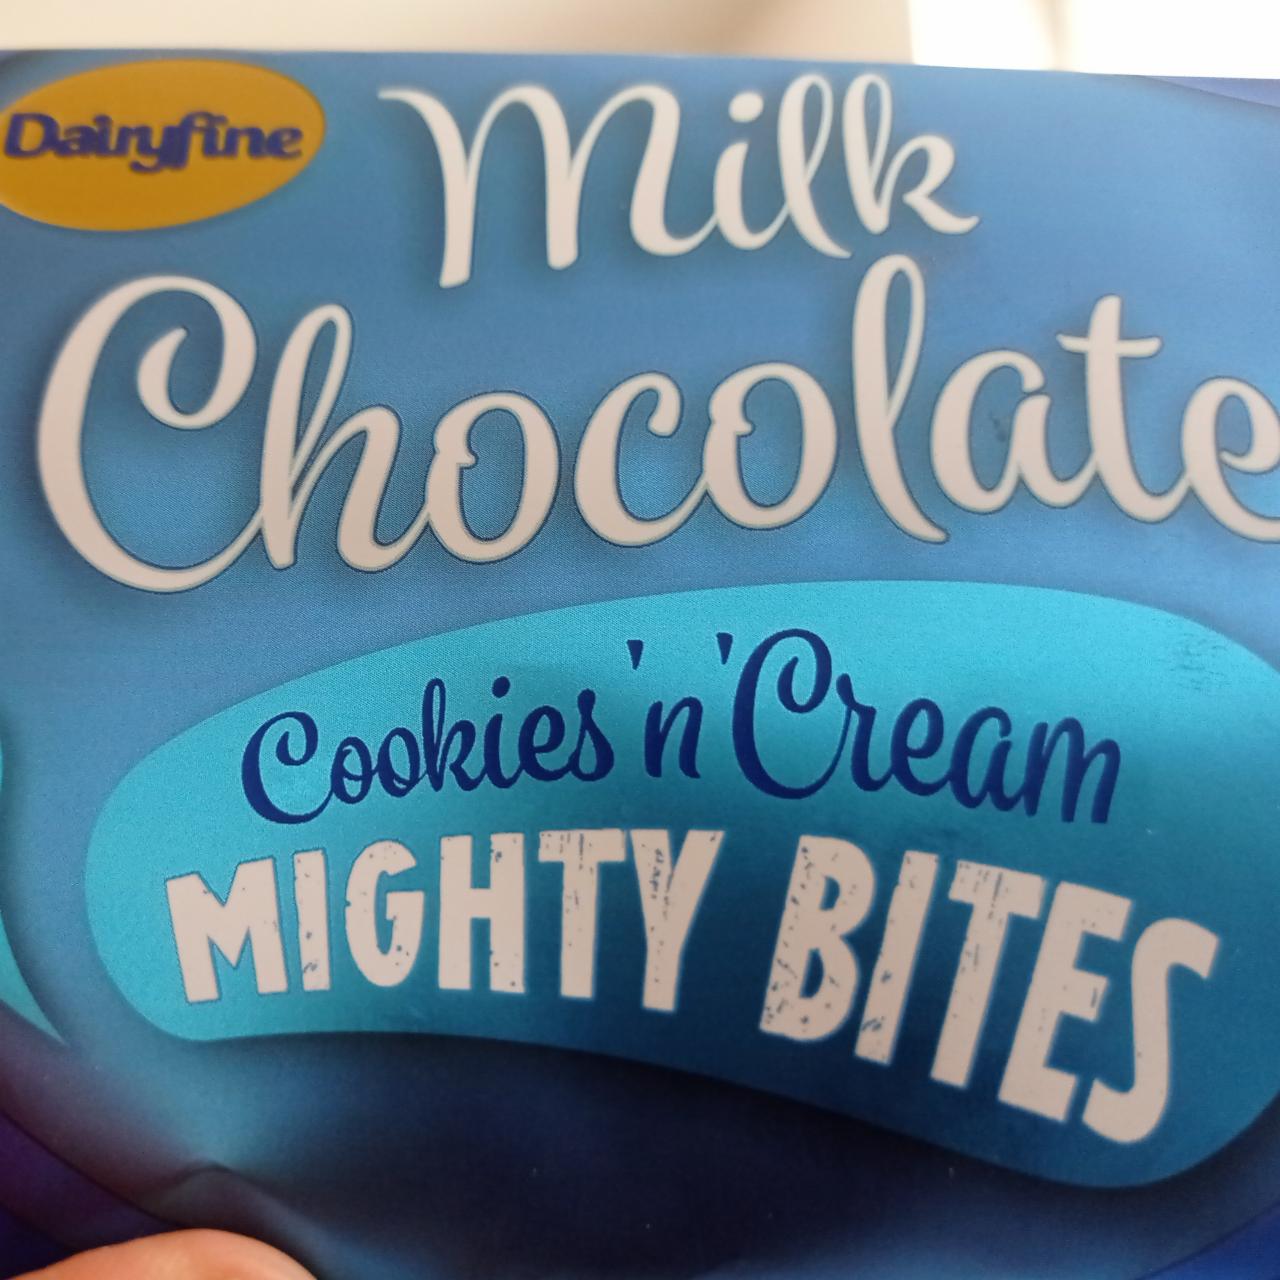 Fotografie - Milk Chocolate Cookies 'n' Cream Mighty Bites Dairyfine